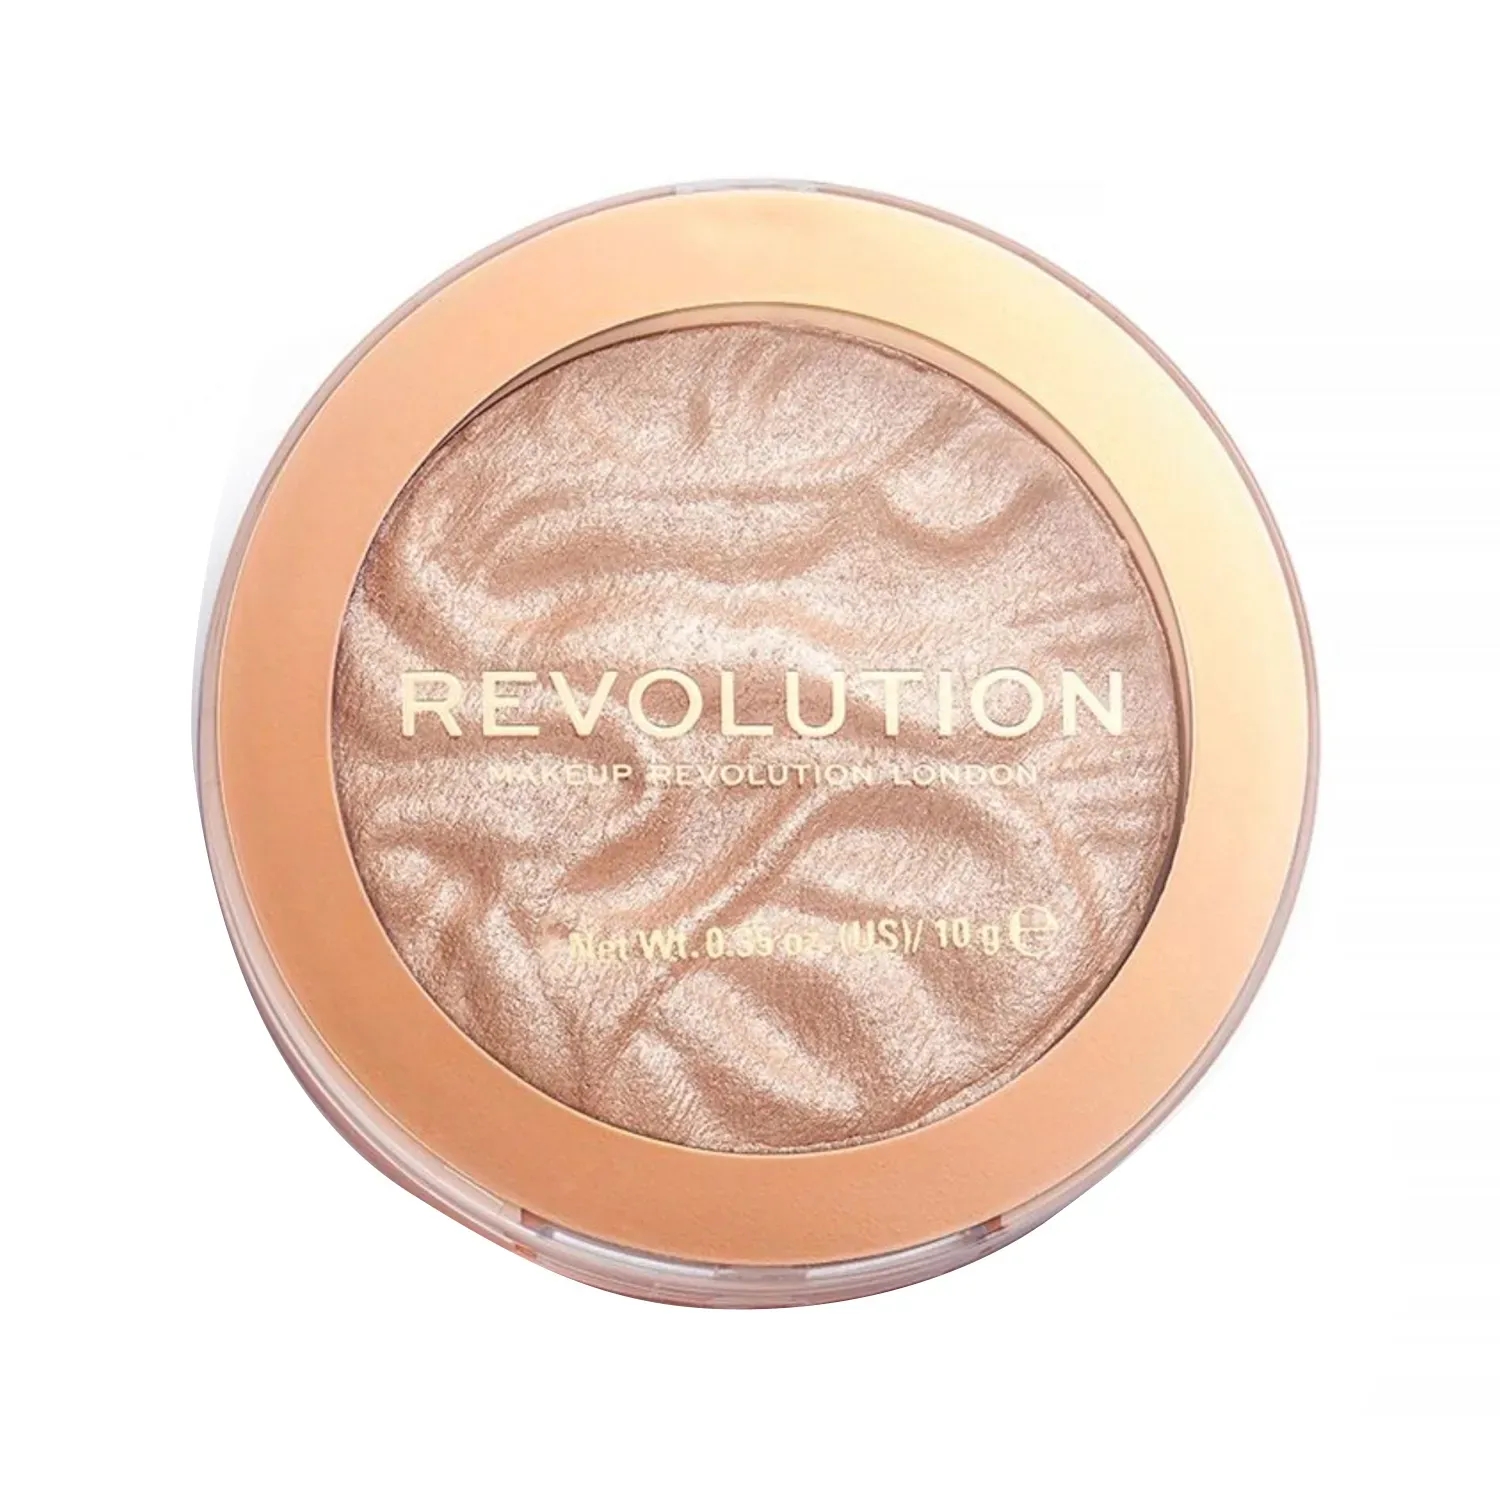 Makeup Revolution | Makeup Revolution Highlight Reloaded - Dare To Divulge (10g)